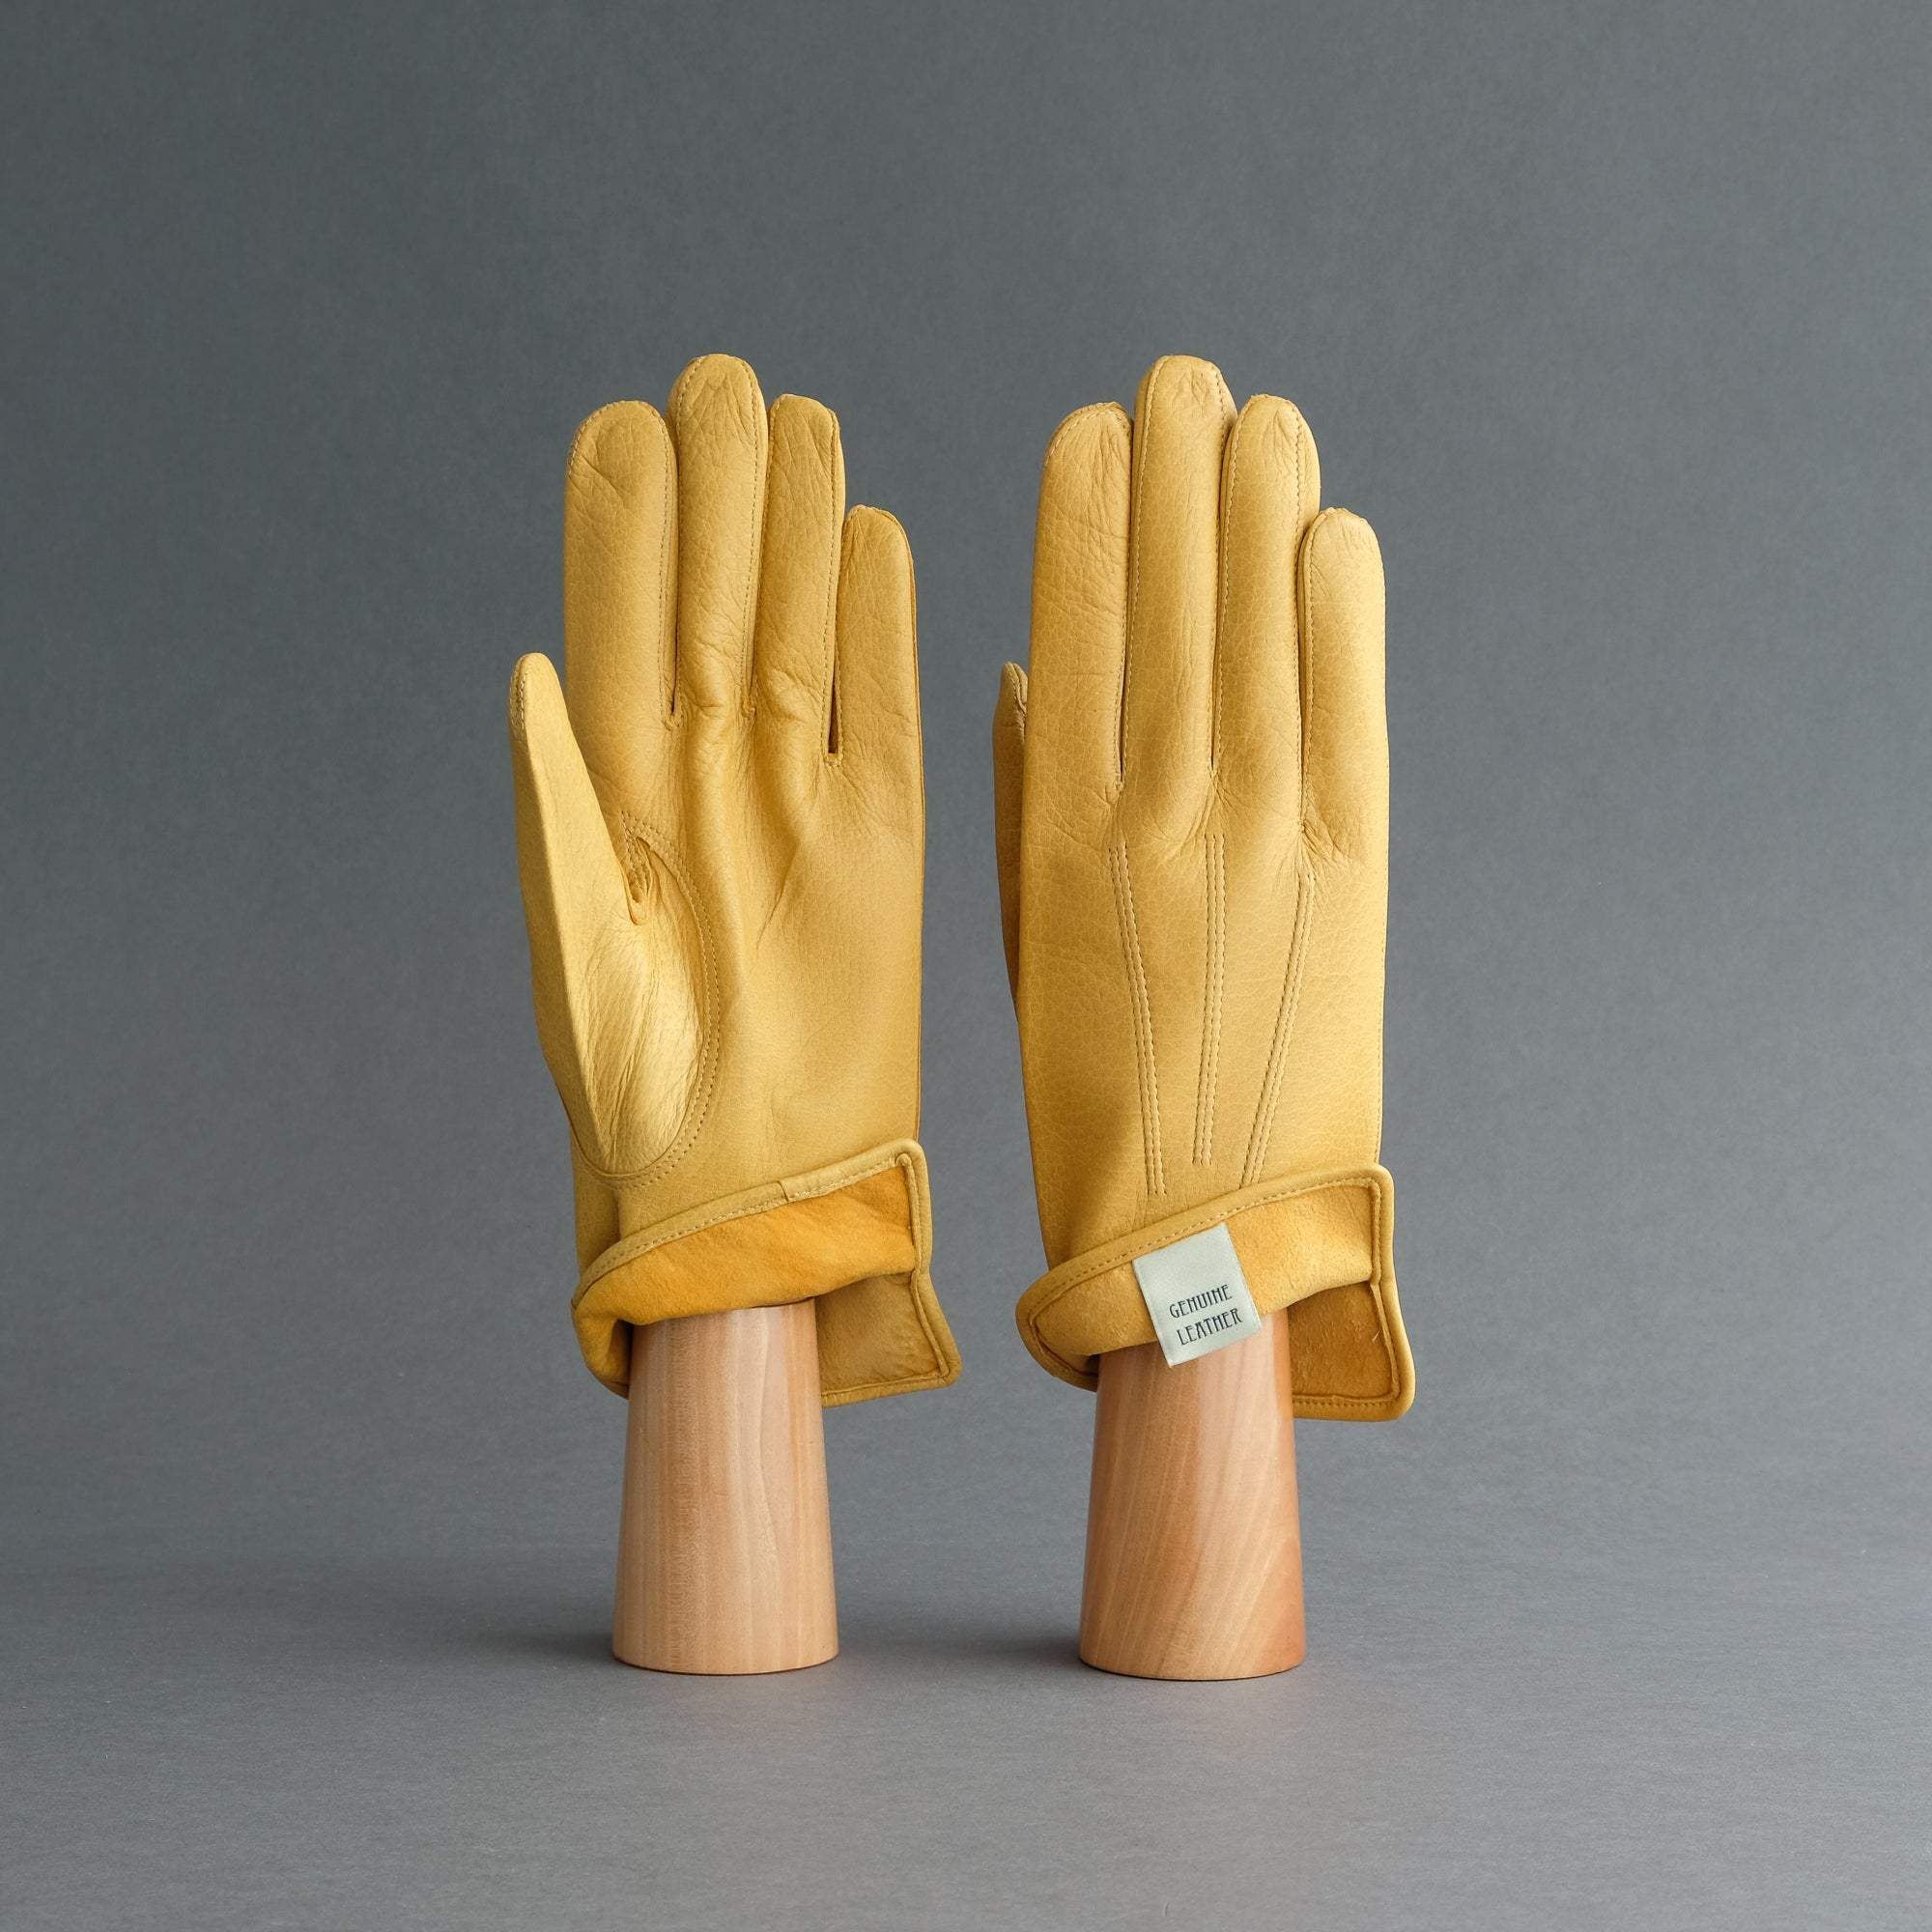 Gentlemen's Unlined Gloves from Yellow Deerskin - TR Handschuhe Wien - Thomas Riemer Handmade Gloves